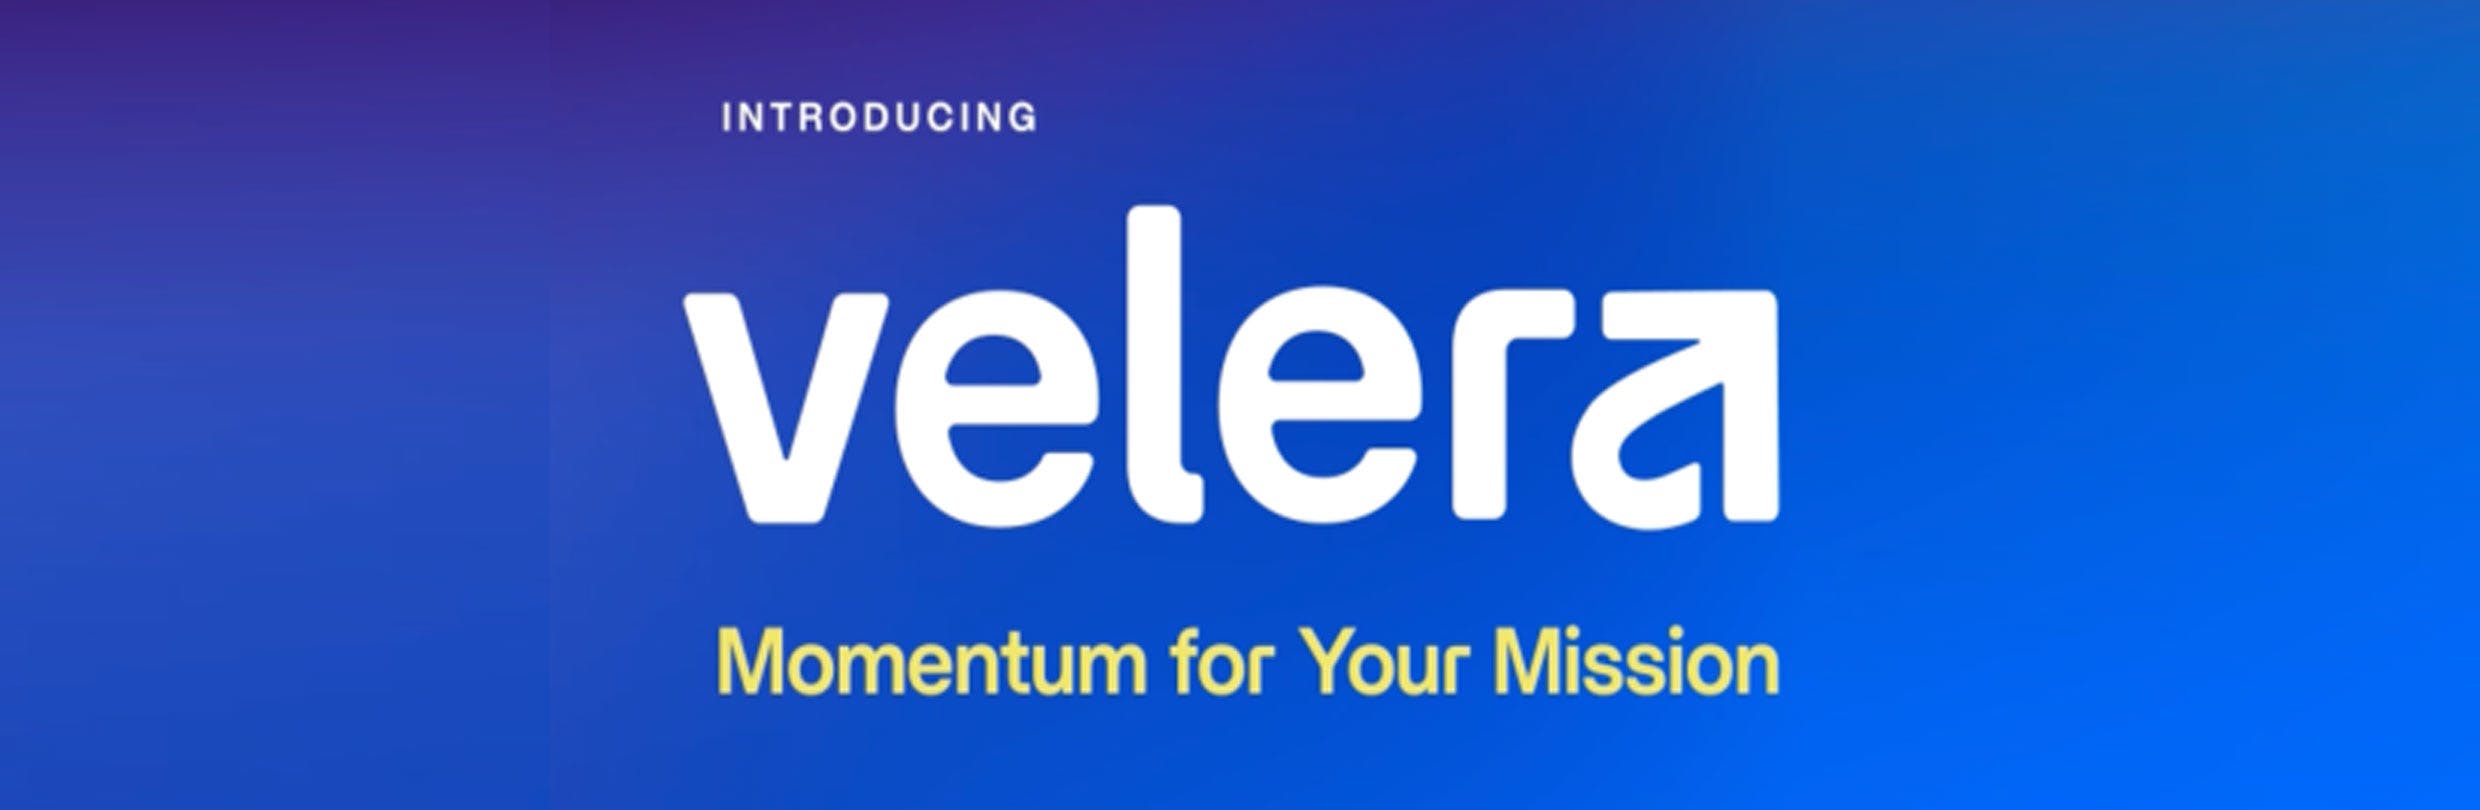 Velera: Momentum for Your Mission